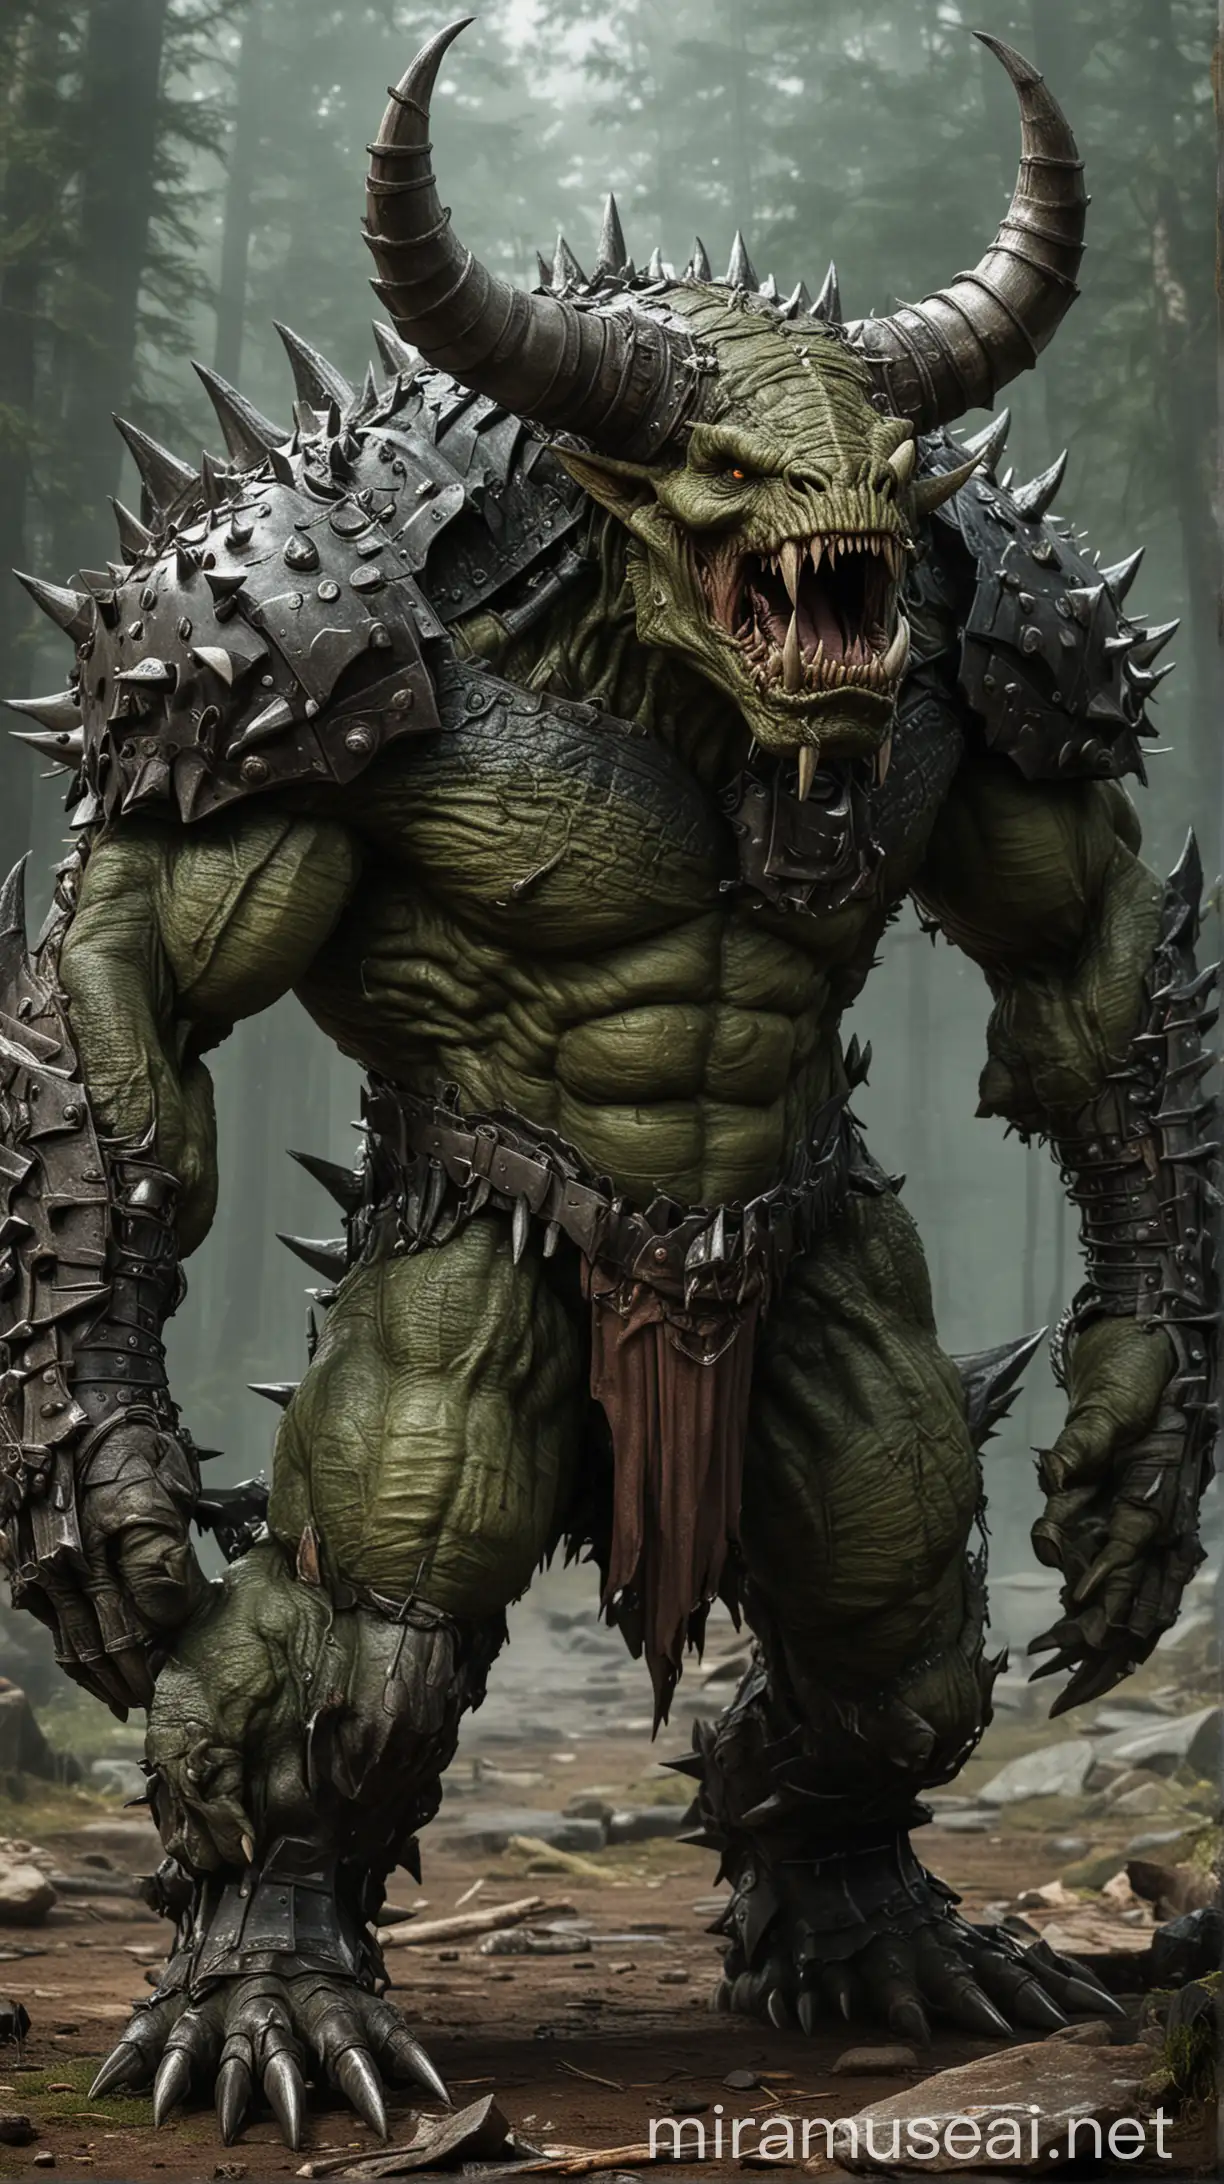 *Name:* Skarvok
*Appearance:* Massive, hulking creature with armored plates, sharp horns, and a maw full of razor-sharp teeth.